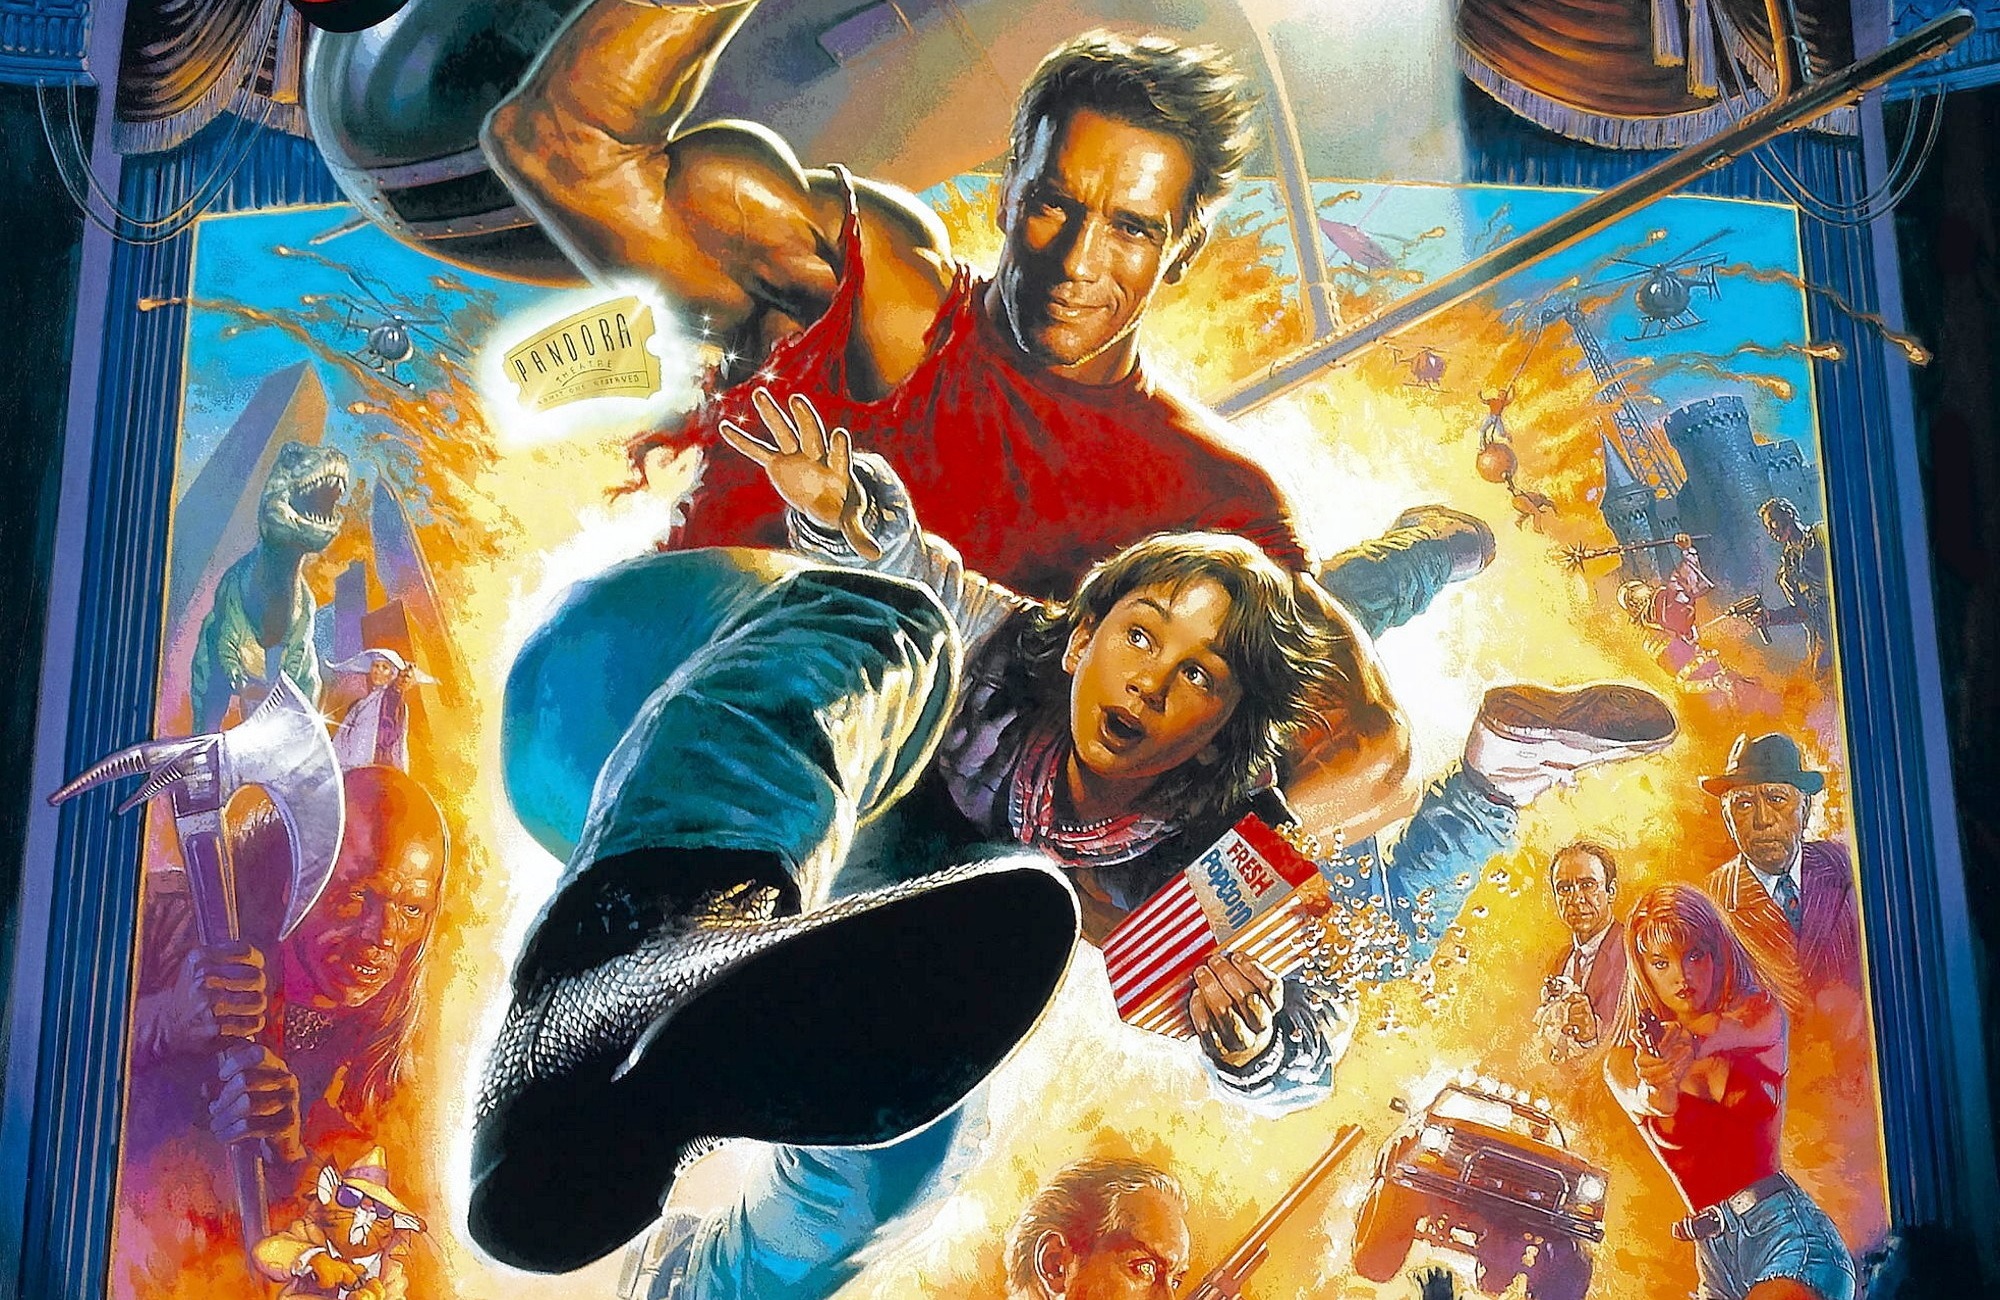 Movie Last Action Hero HD Wallpaper | Background Image